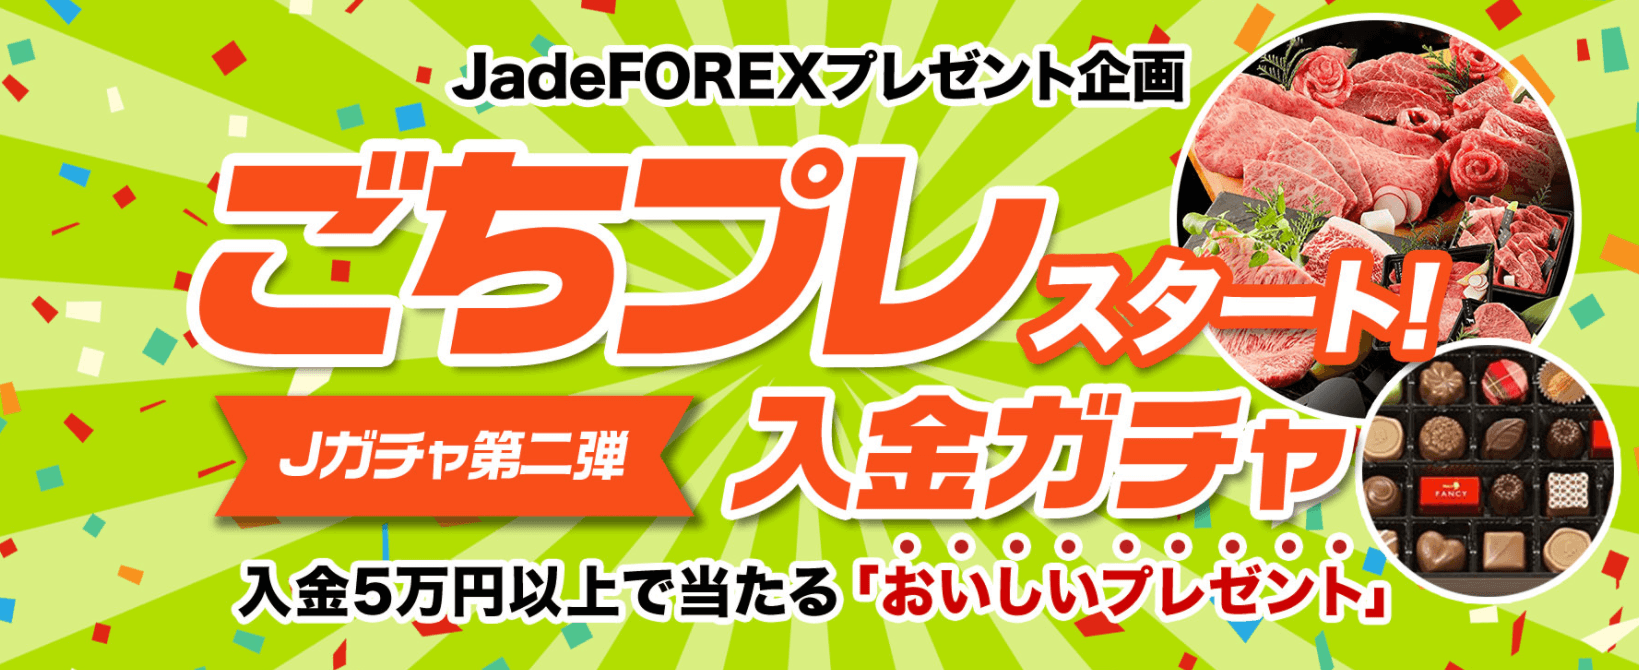 JadeFOREXのプレゼント企画「入金ガチャ」